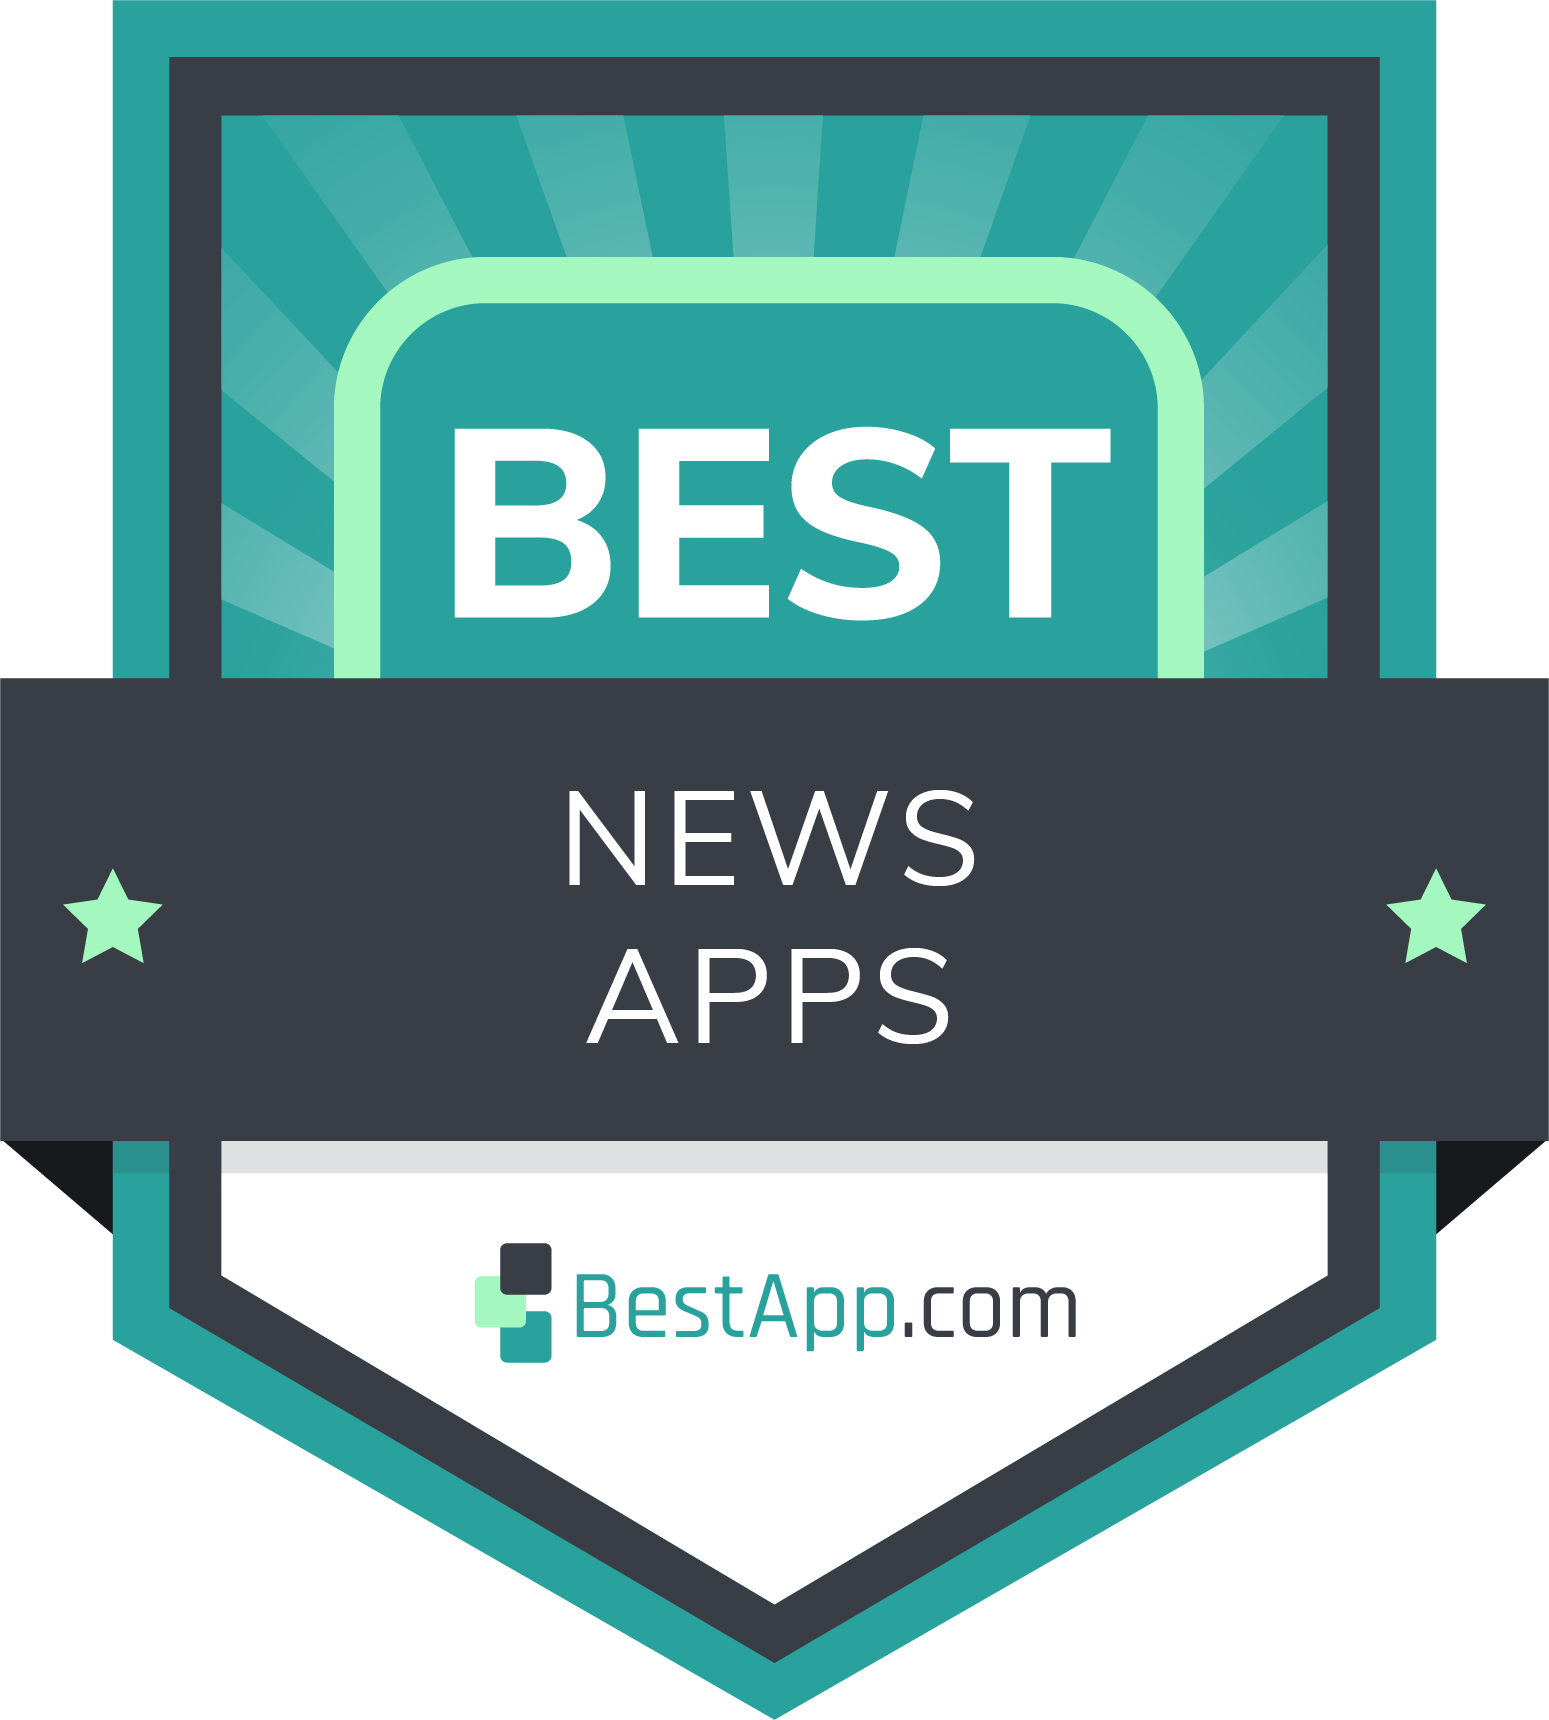 Best News Apps Badge